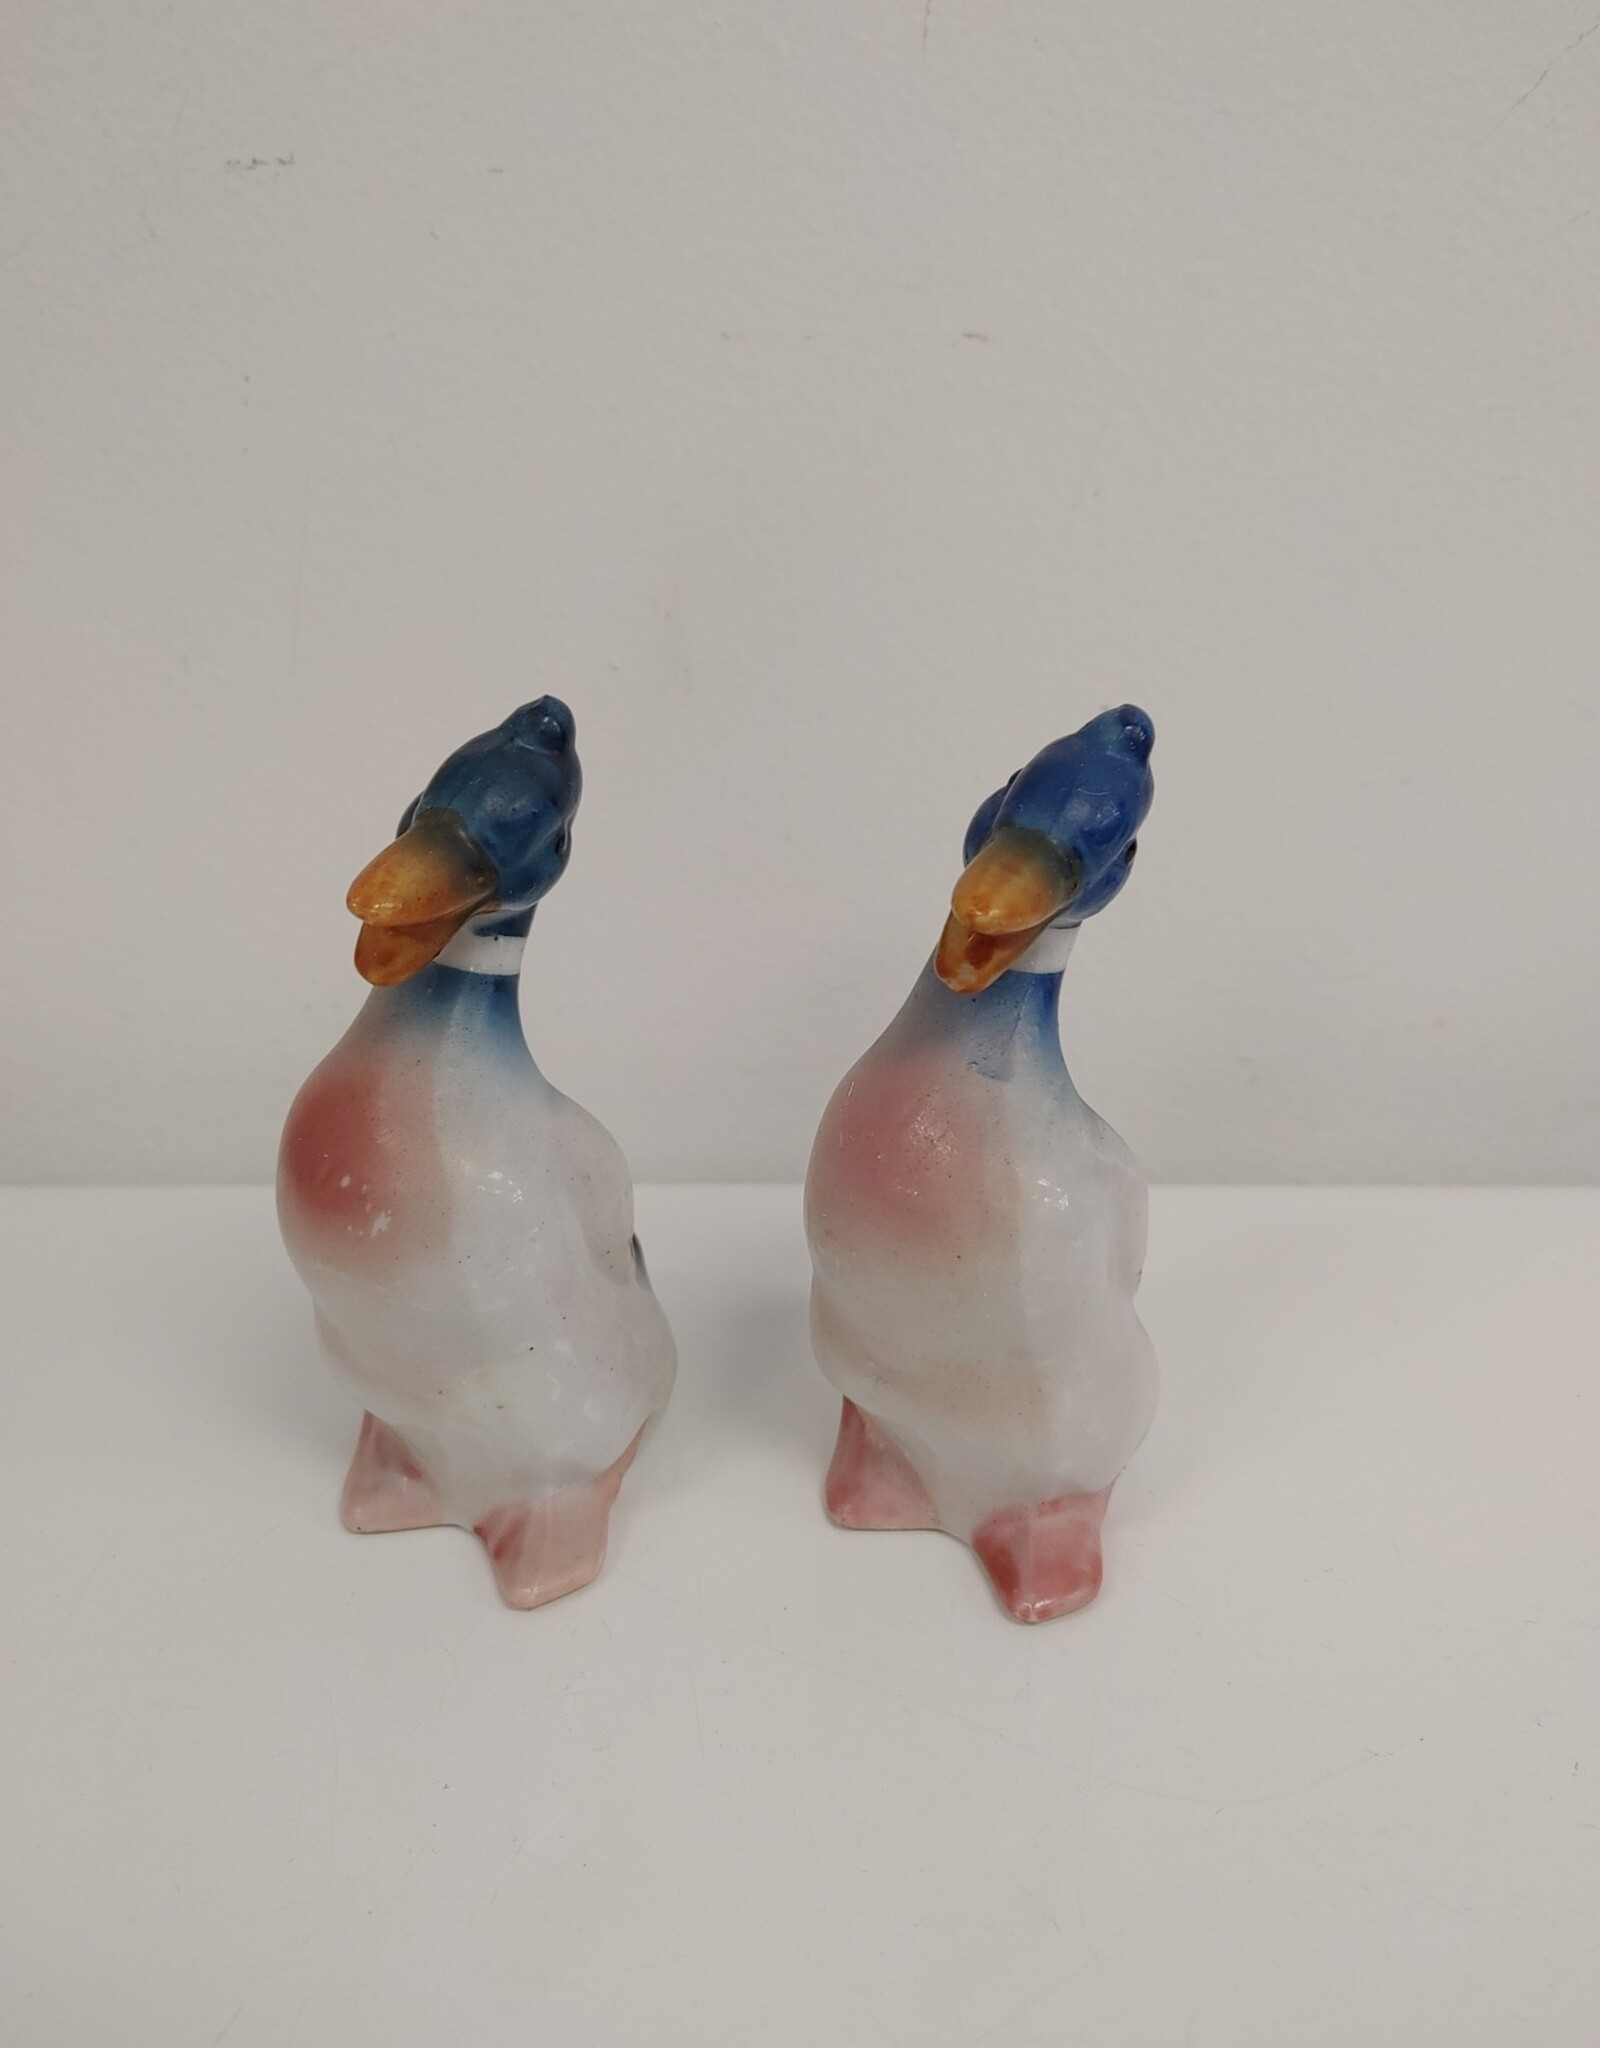 Vintage Pair of Mallard Duck Figurines - hand-painted